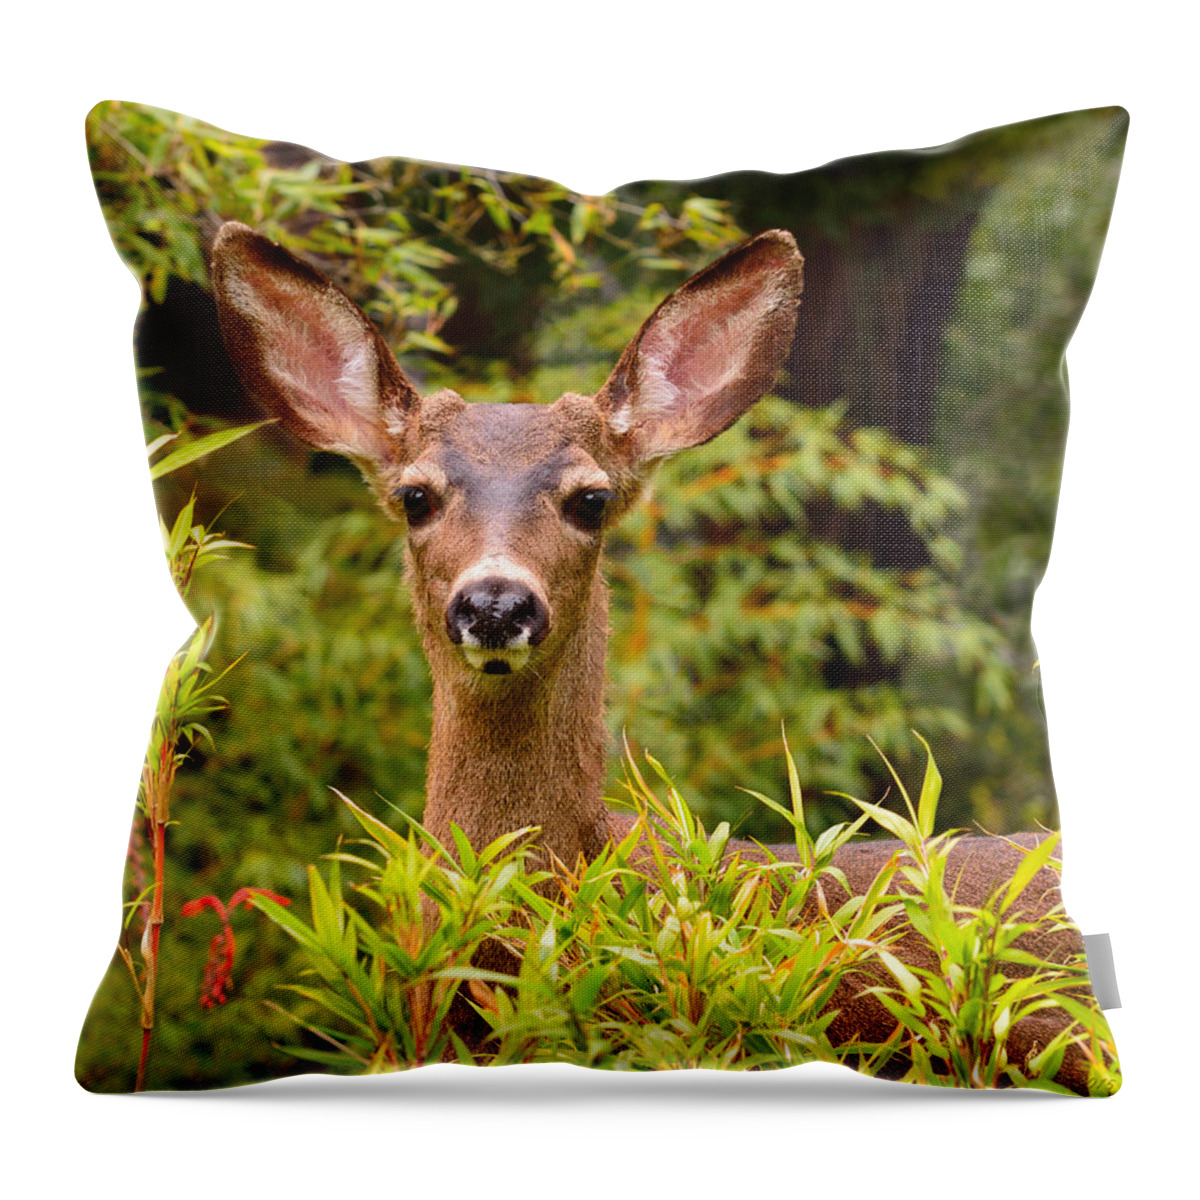 Deer Throw Pillow featuring the photograph Curiosity by Brian Tada